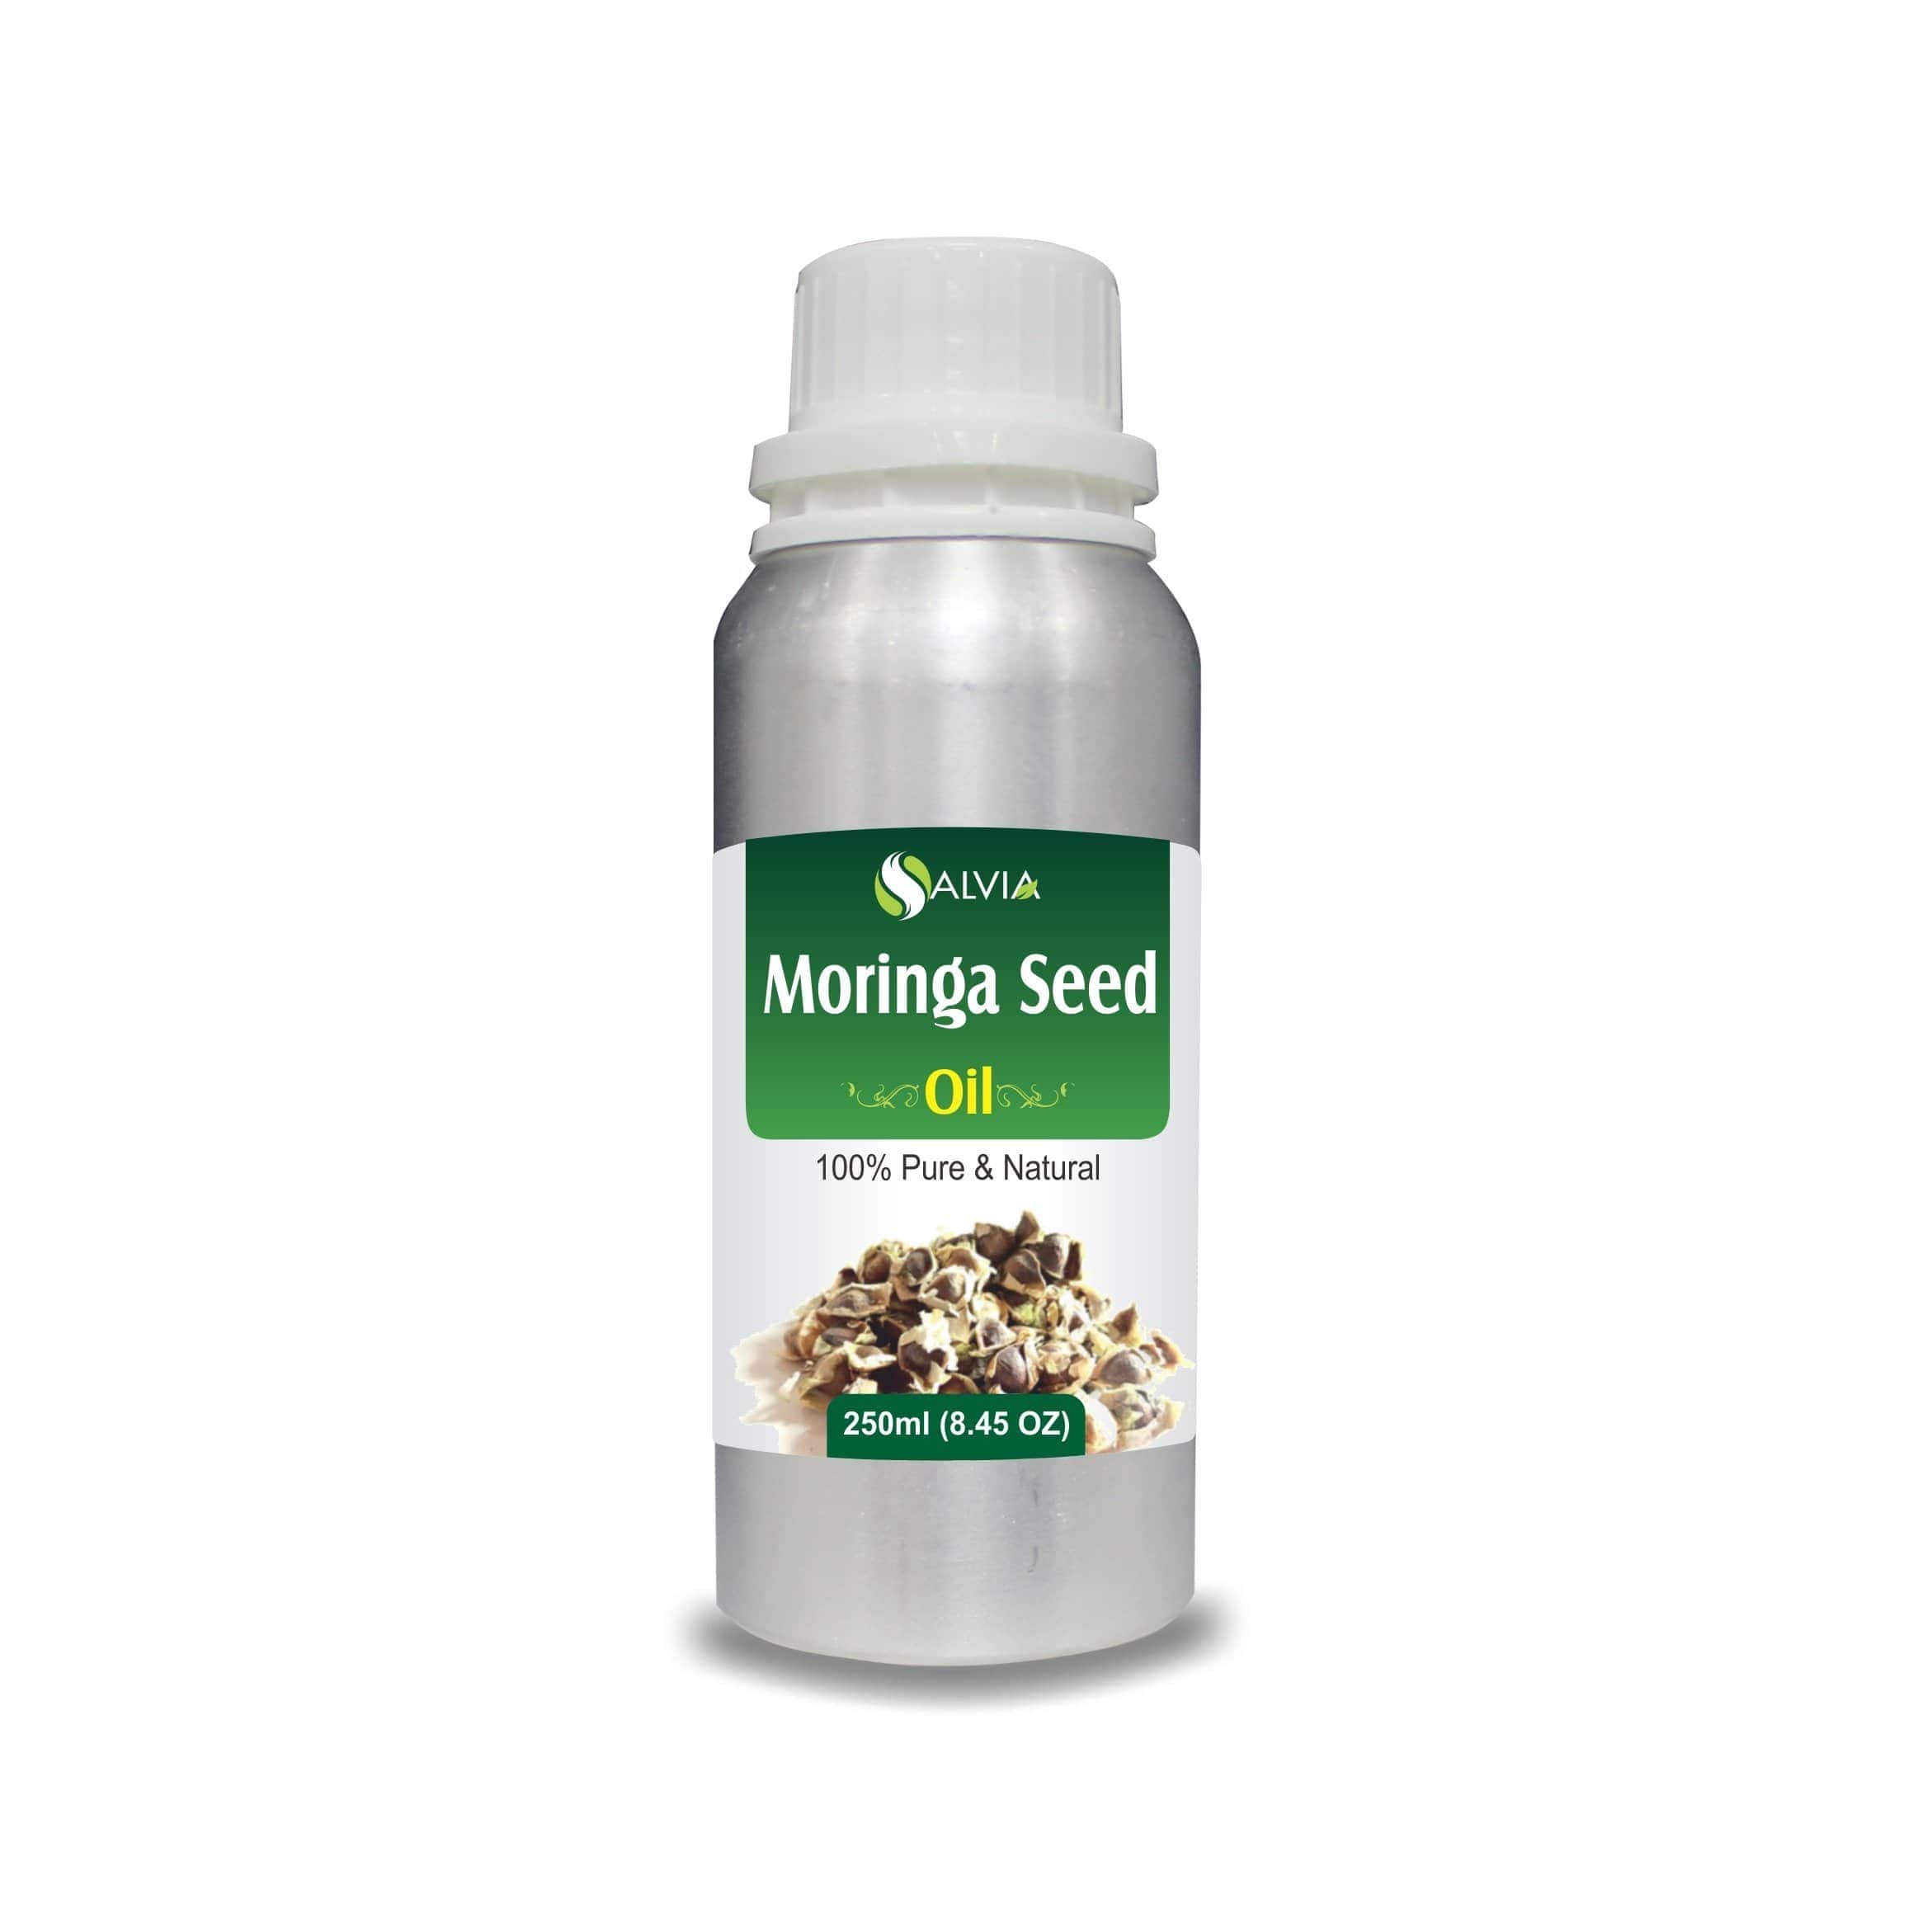 moringa seed oil for hair